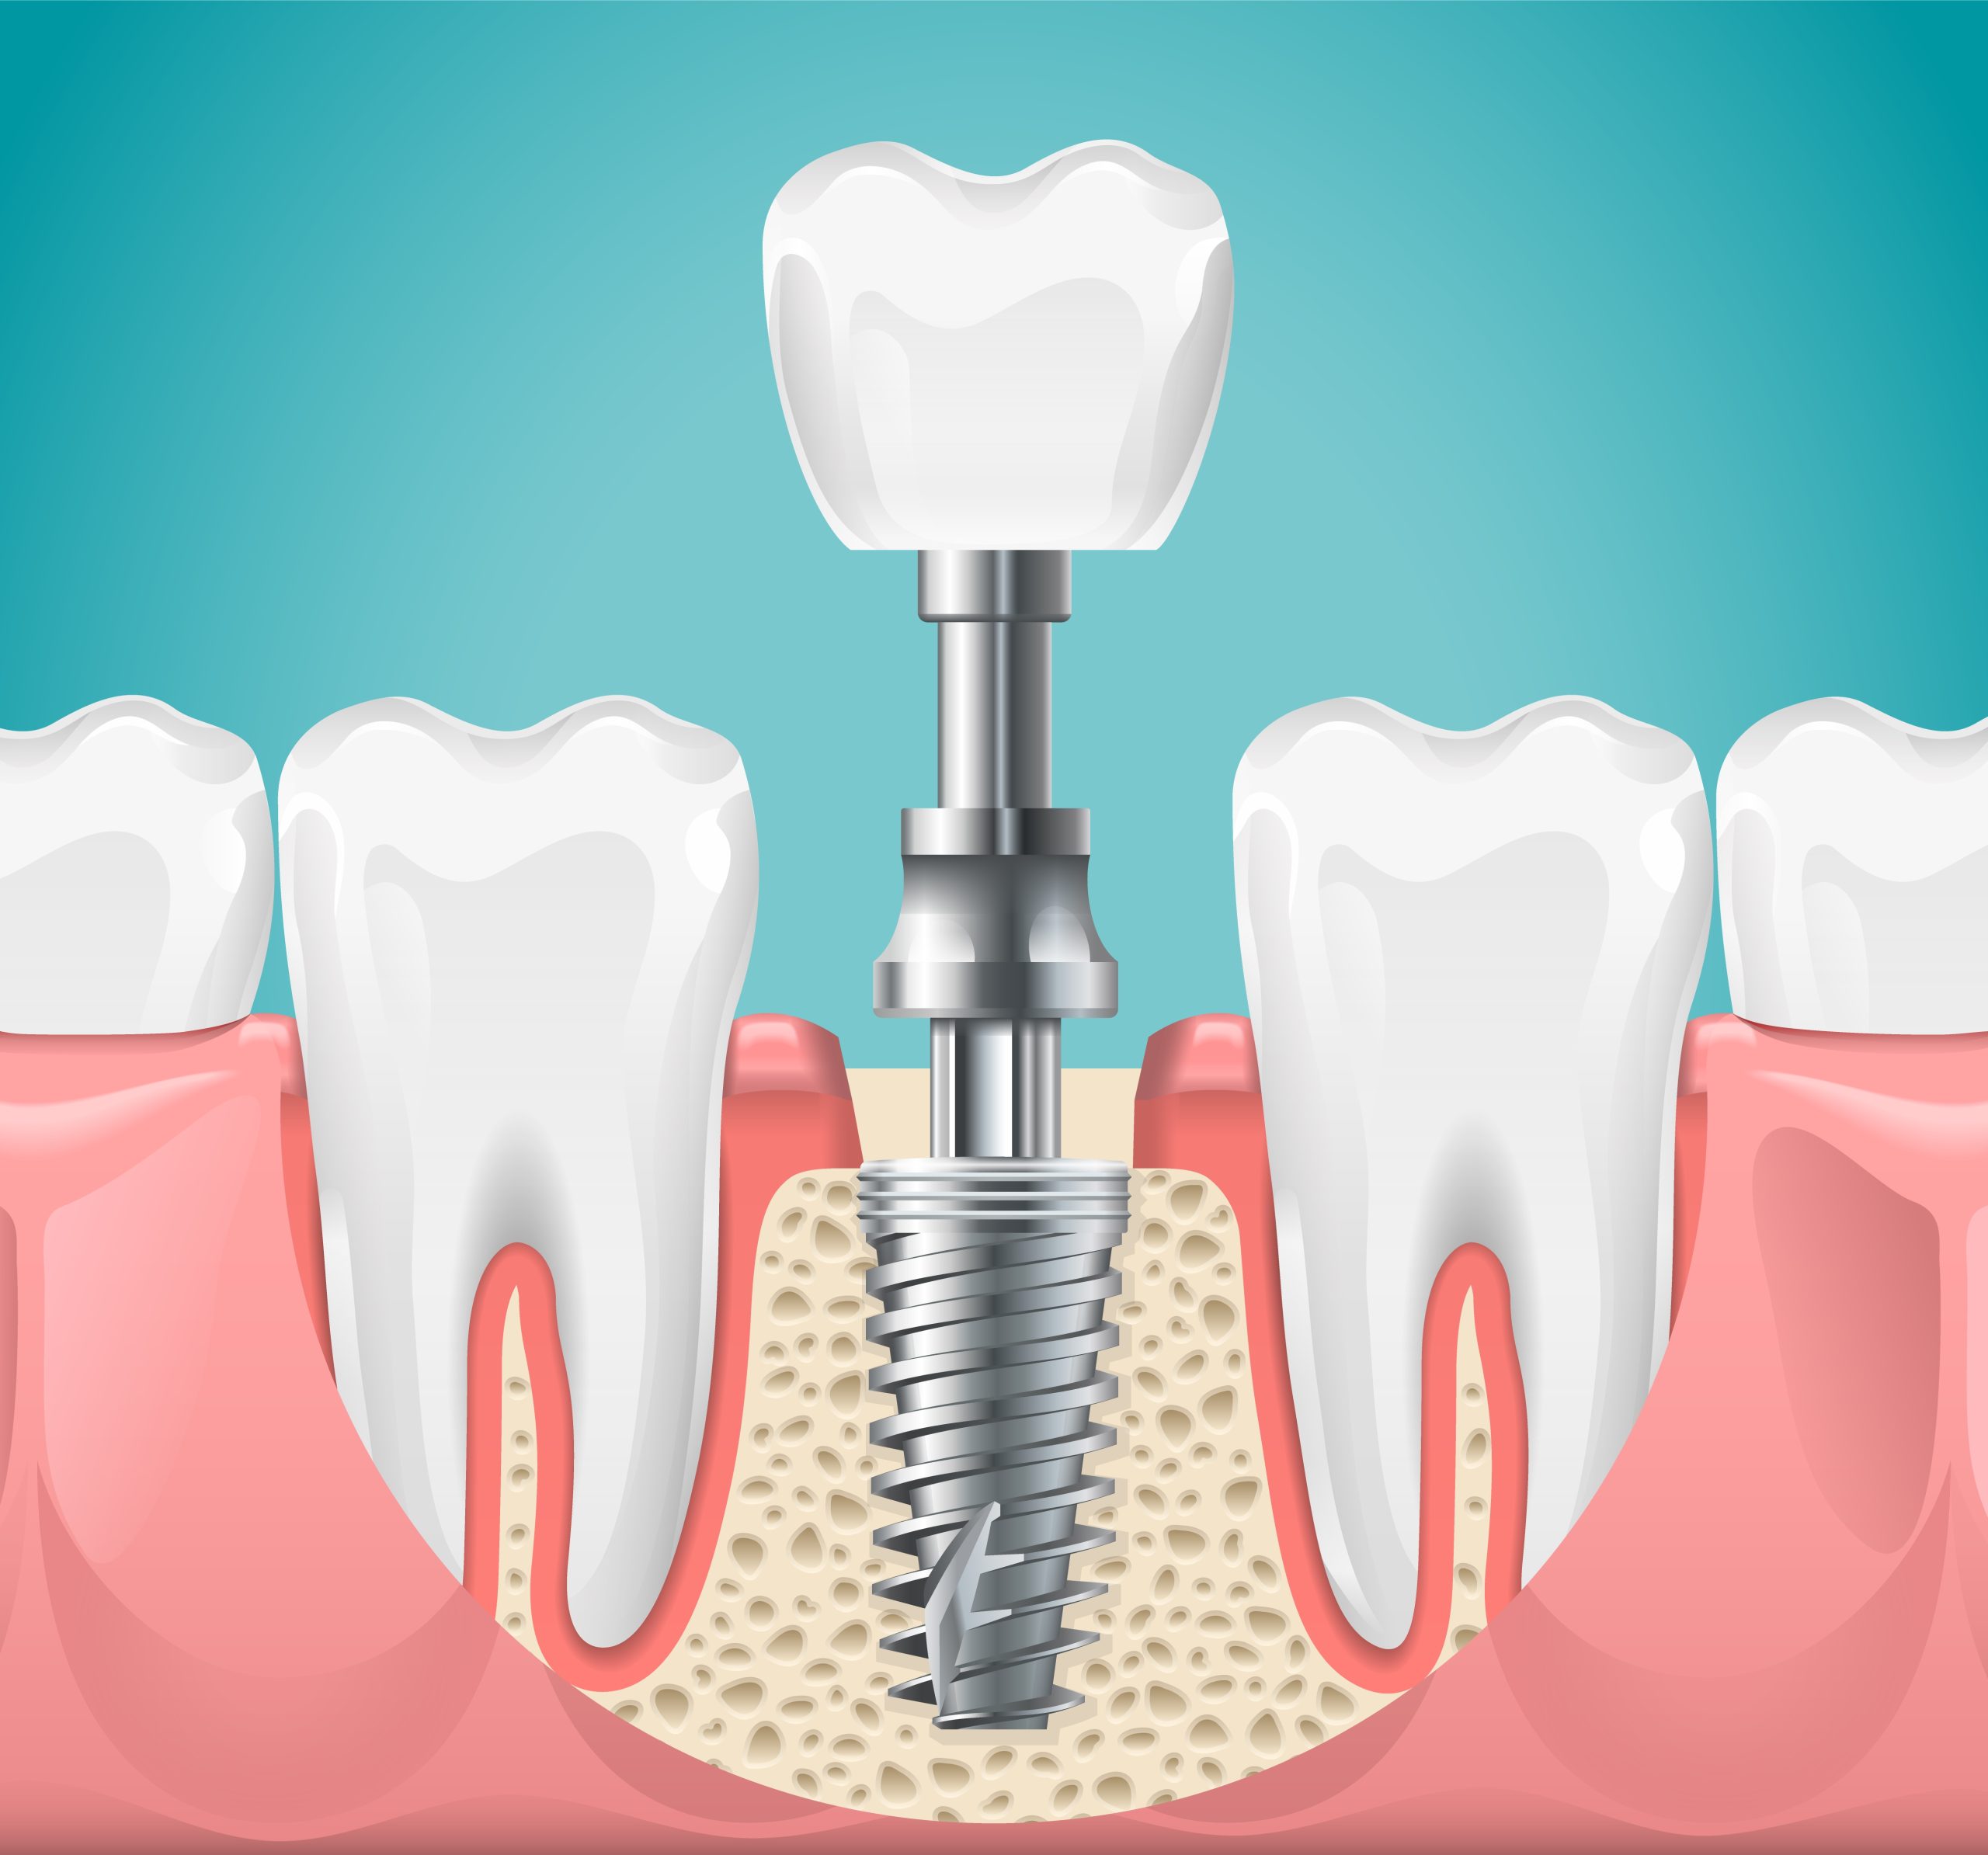 Dental Implant Procedure dental surgery. tooth implant cut illustration, healthy teeth and dental implant